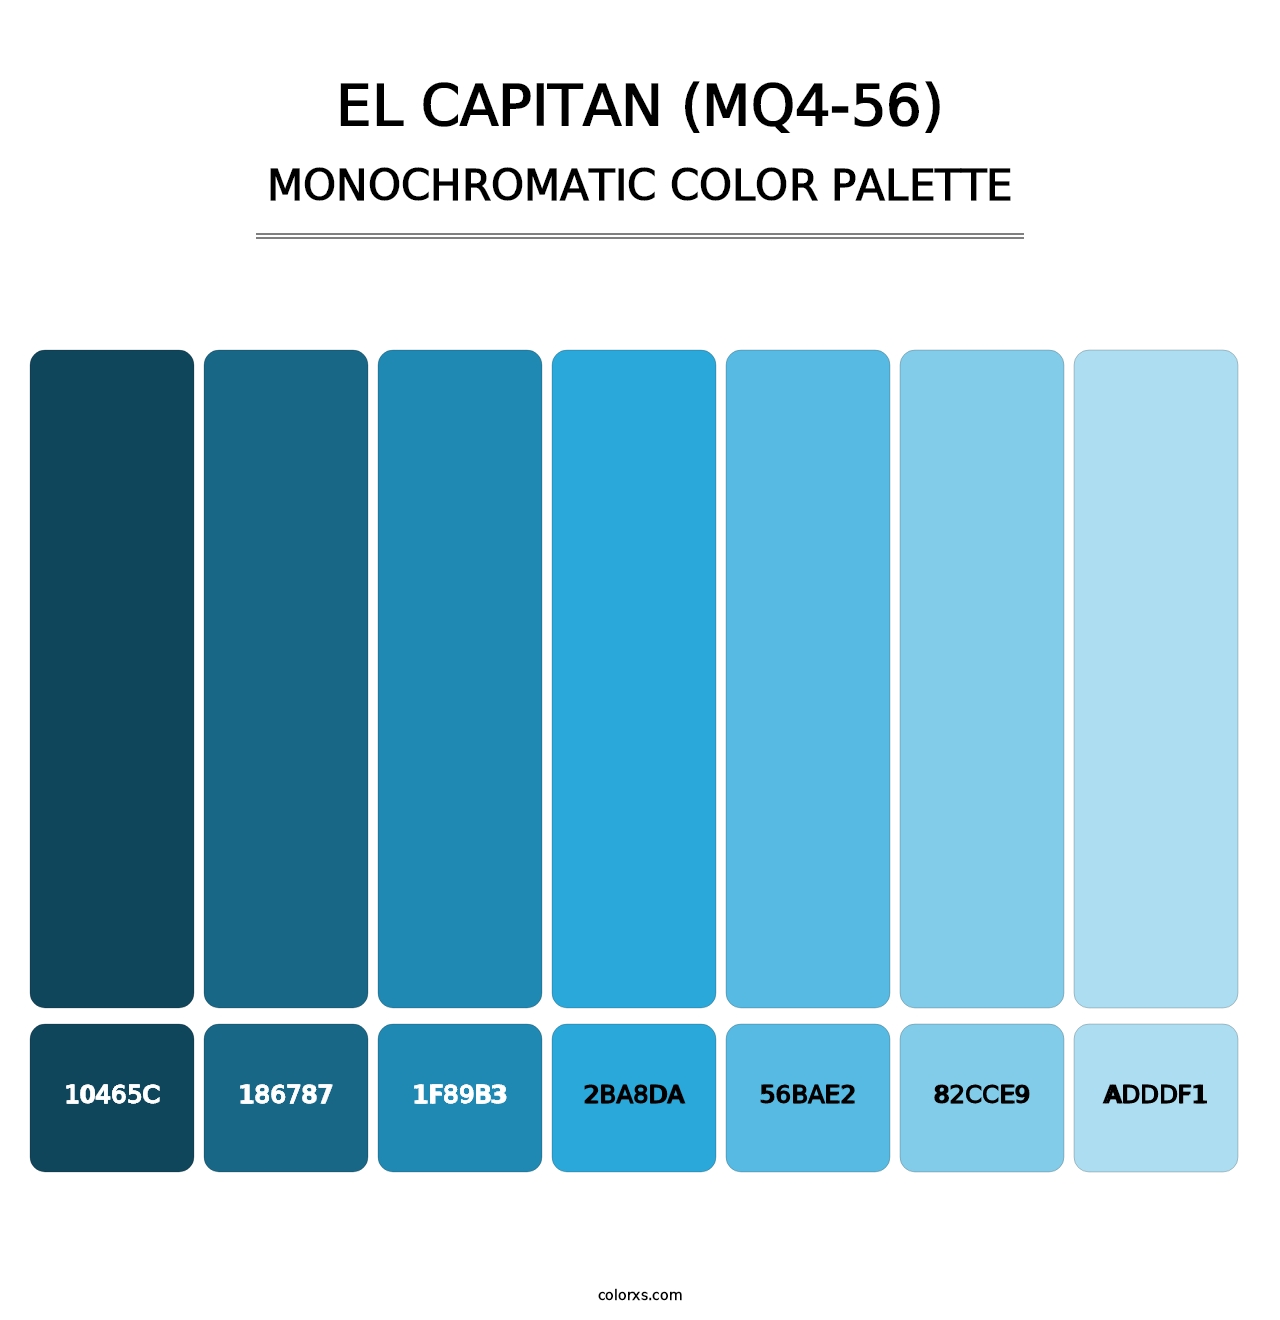 El Capitan (MQ4-56) - Monochromatic Color Palette